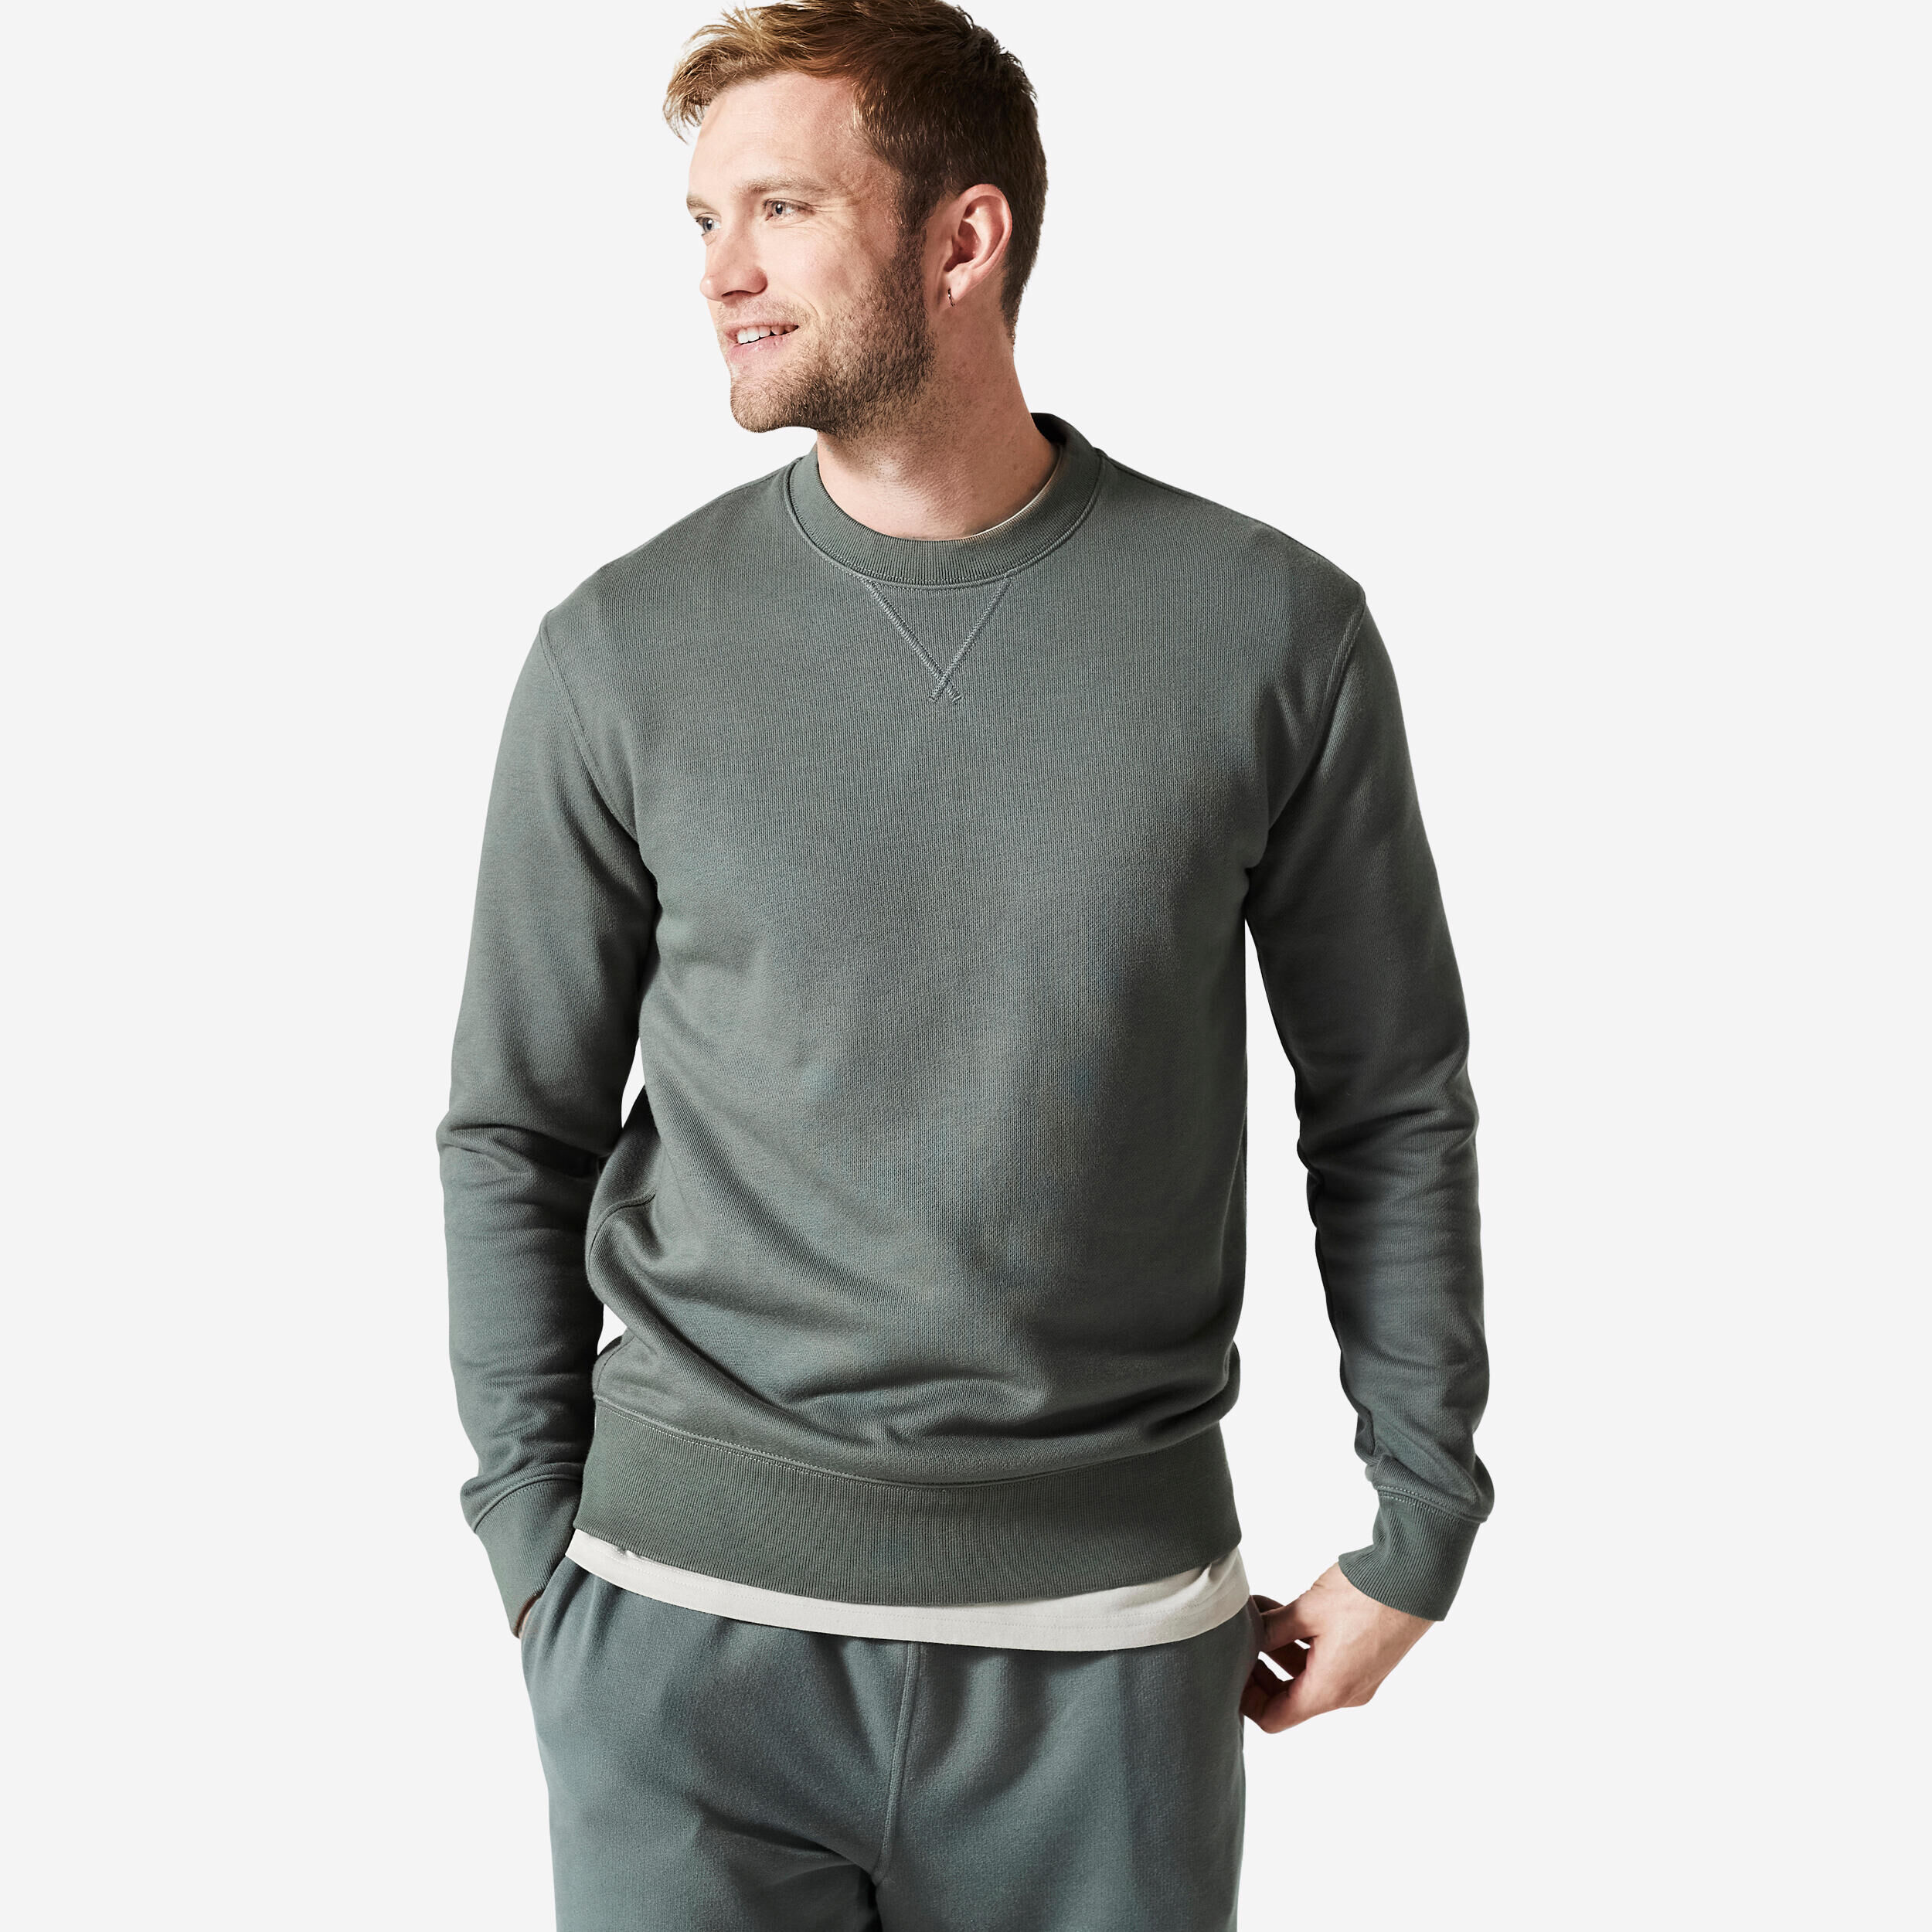 DOMYOS Men's Crew Neck Fitness Sweatshirt 500 Essentials - Khaki Green